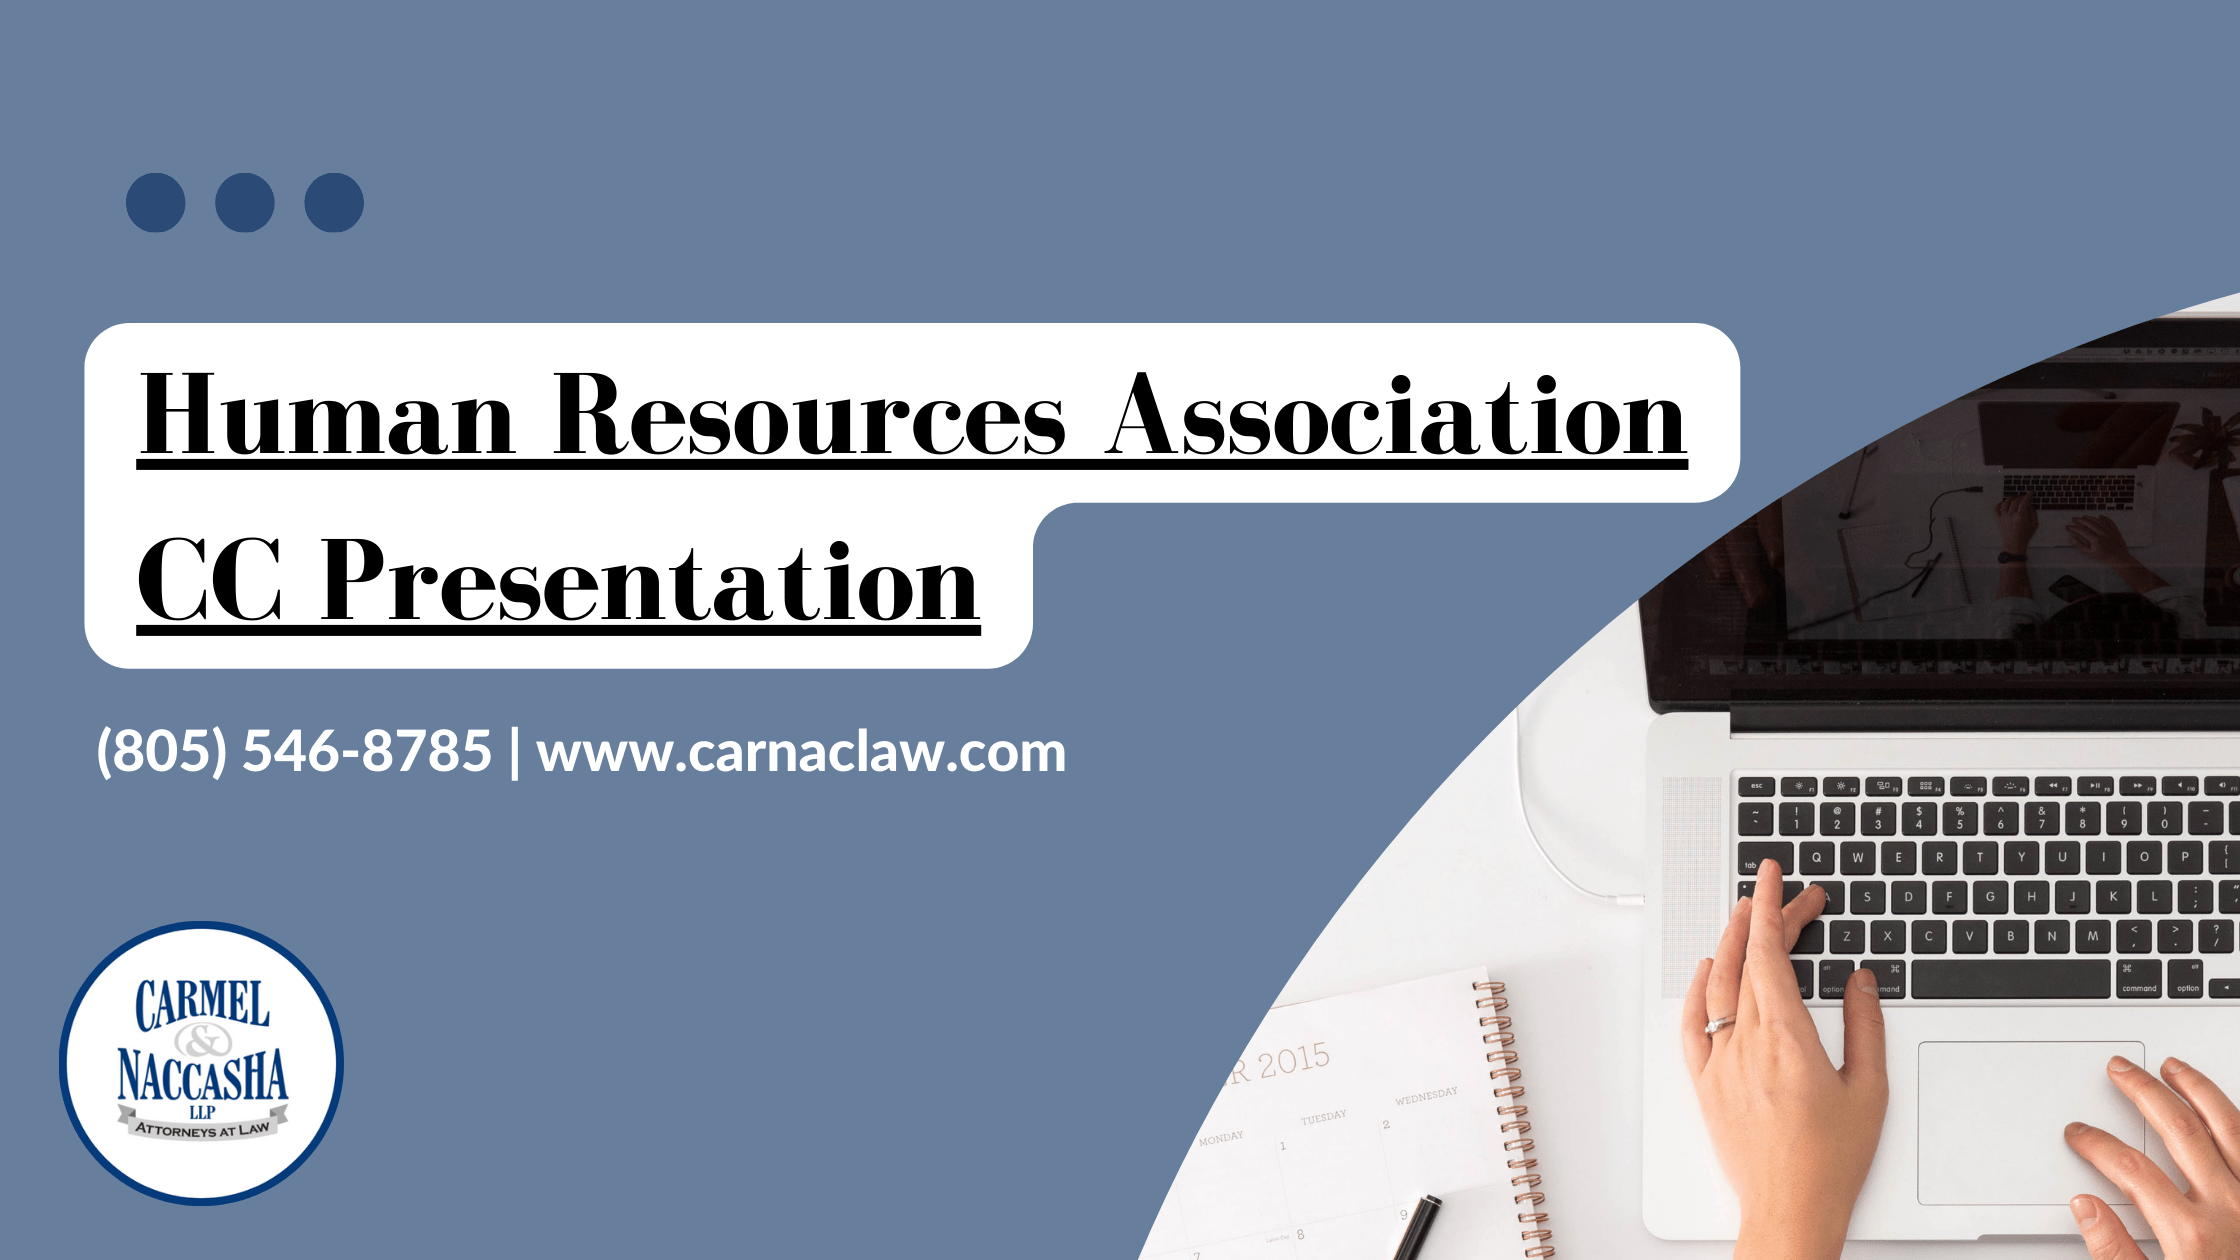 Human Resources Association CC Presentation Blog banner